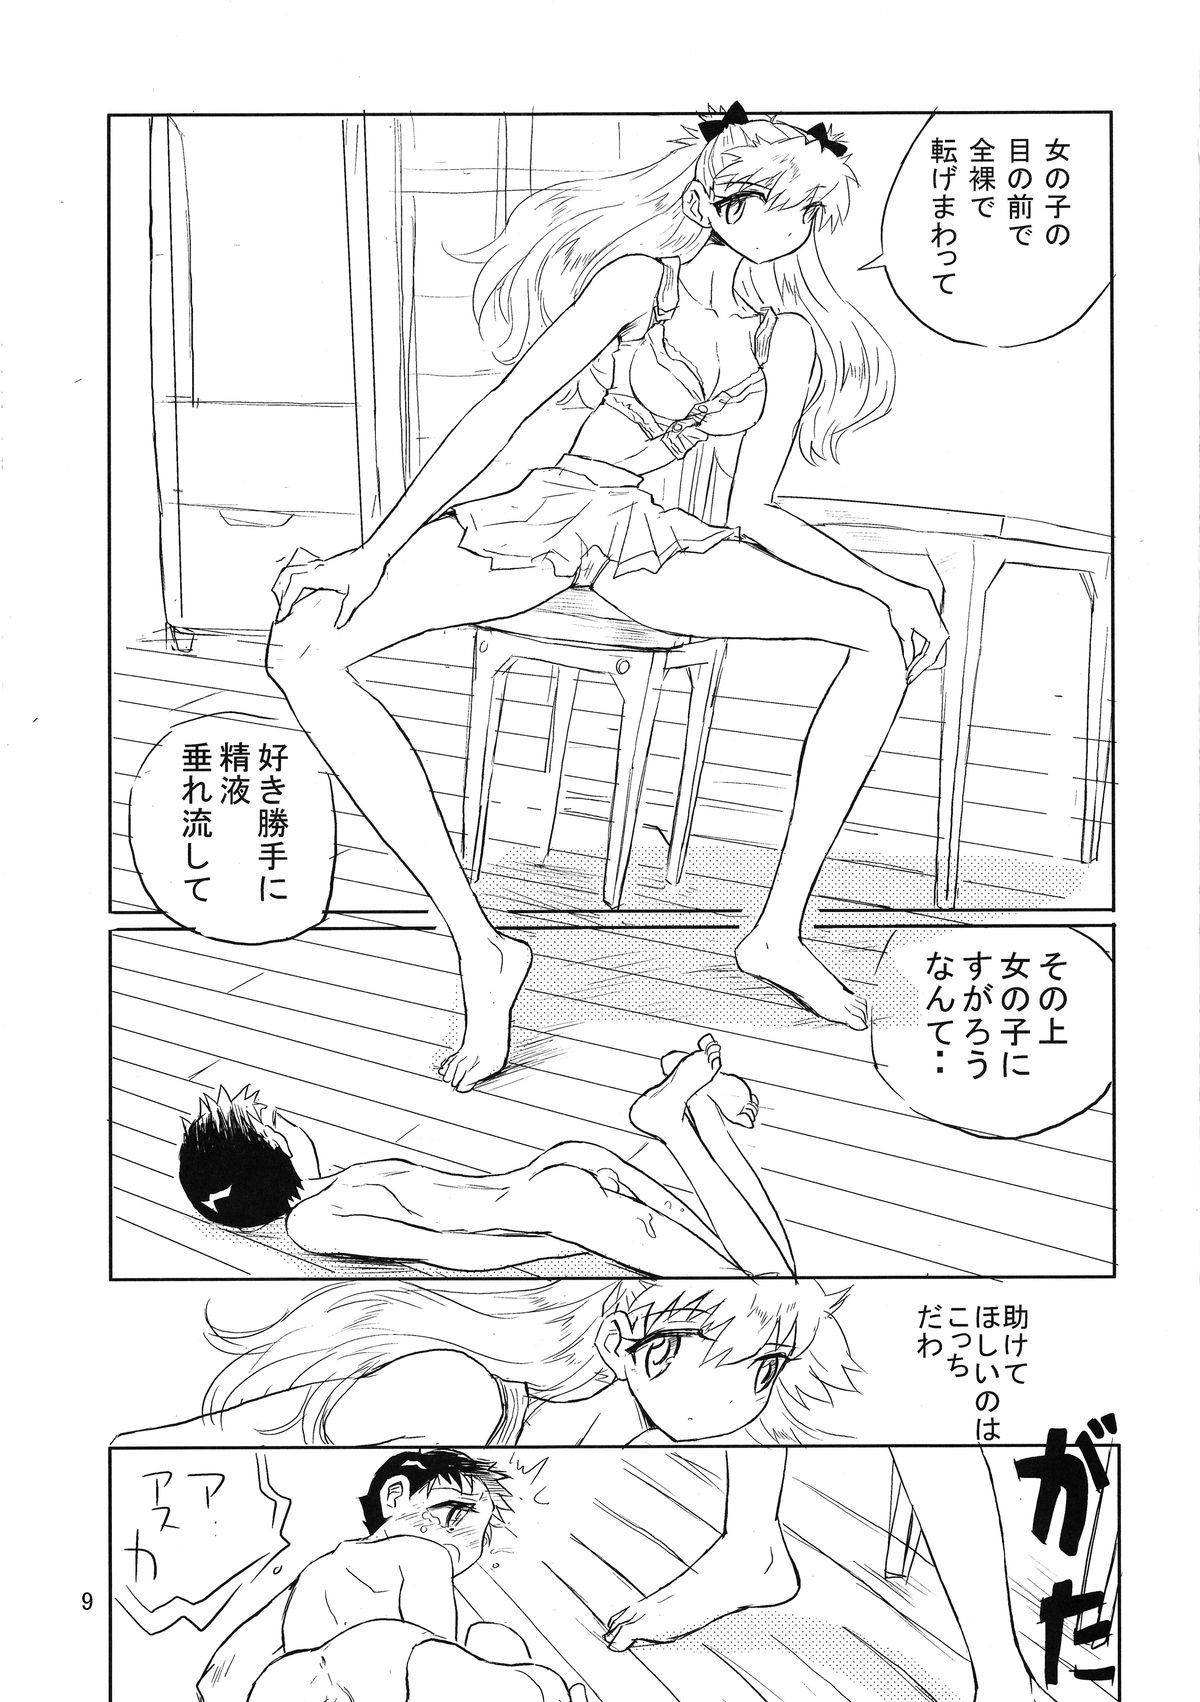 Hardcorend Otoko no Tatakai 11 - Neon genesis evangelion Transexual - Page 8